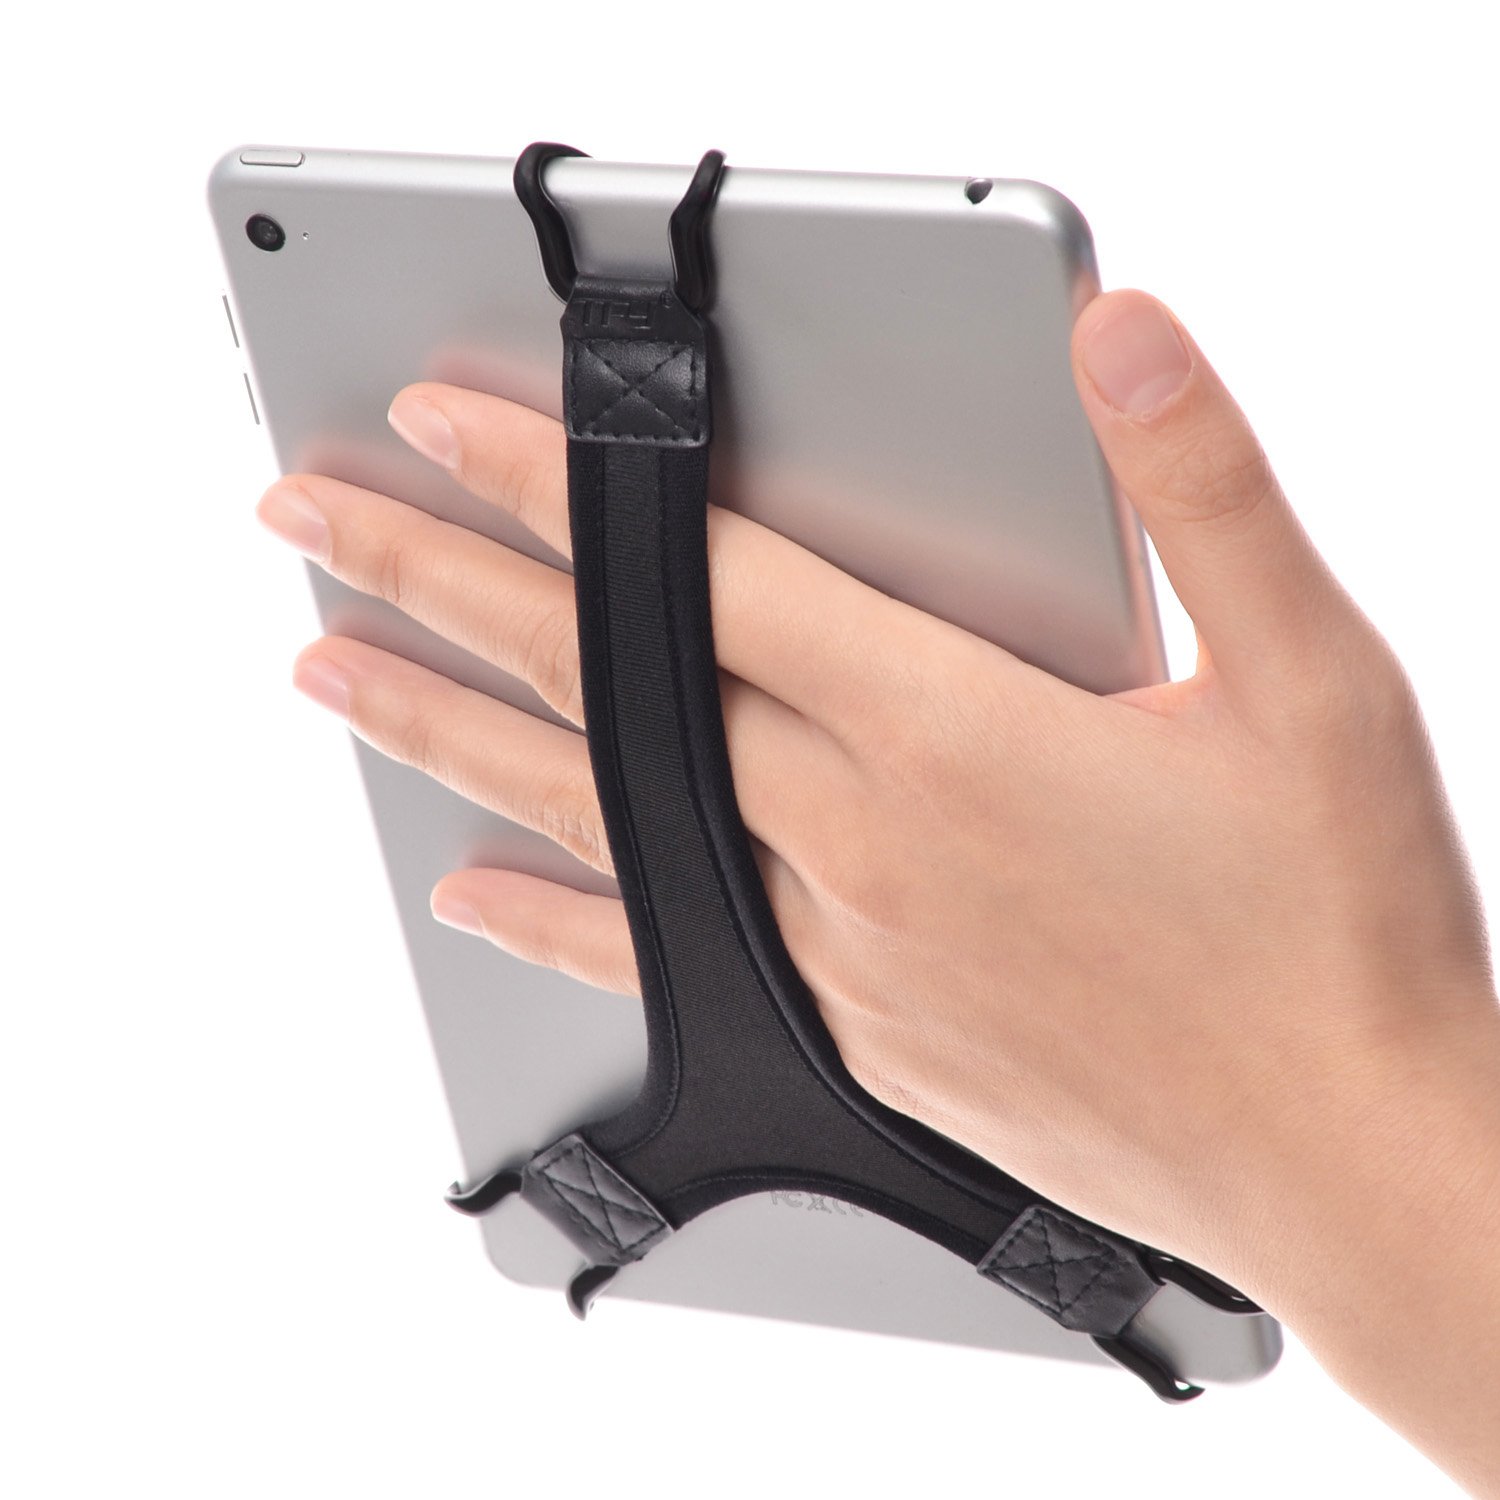 TFY Sicherheits-Handschlaufe für Tablet – kompatibel mit Fire 7 Zoll / Fire HD 8 / iPad Mini / Galaxy Tab S 8.4 / Galaxy Tab 2/3/4/Galaxy Tab 7.7 (schwarz)